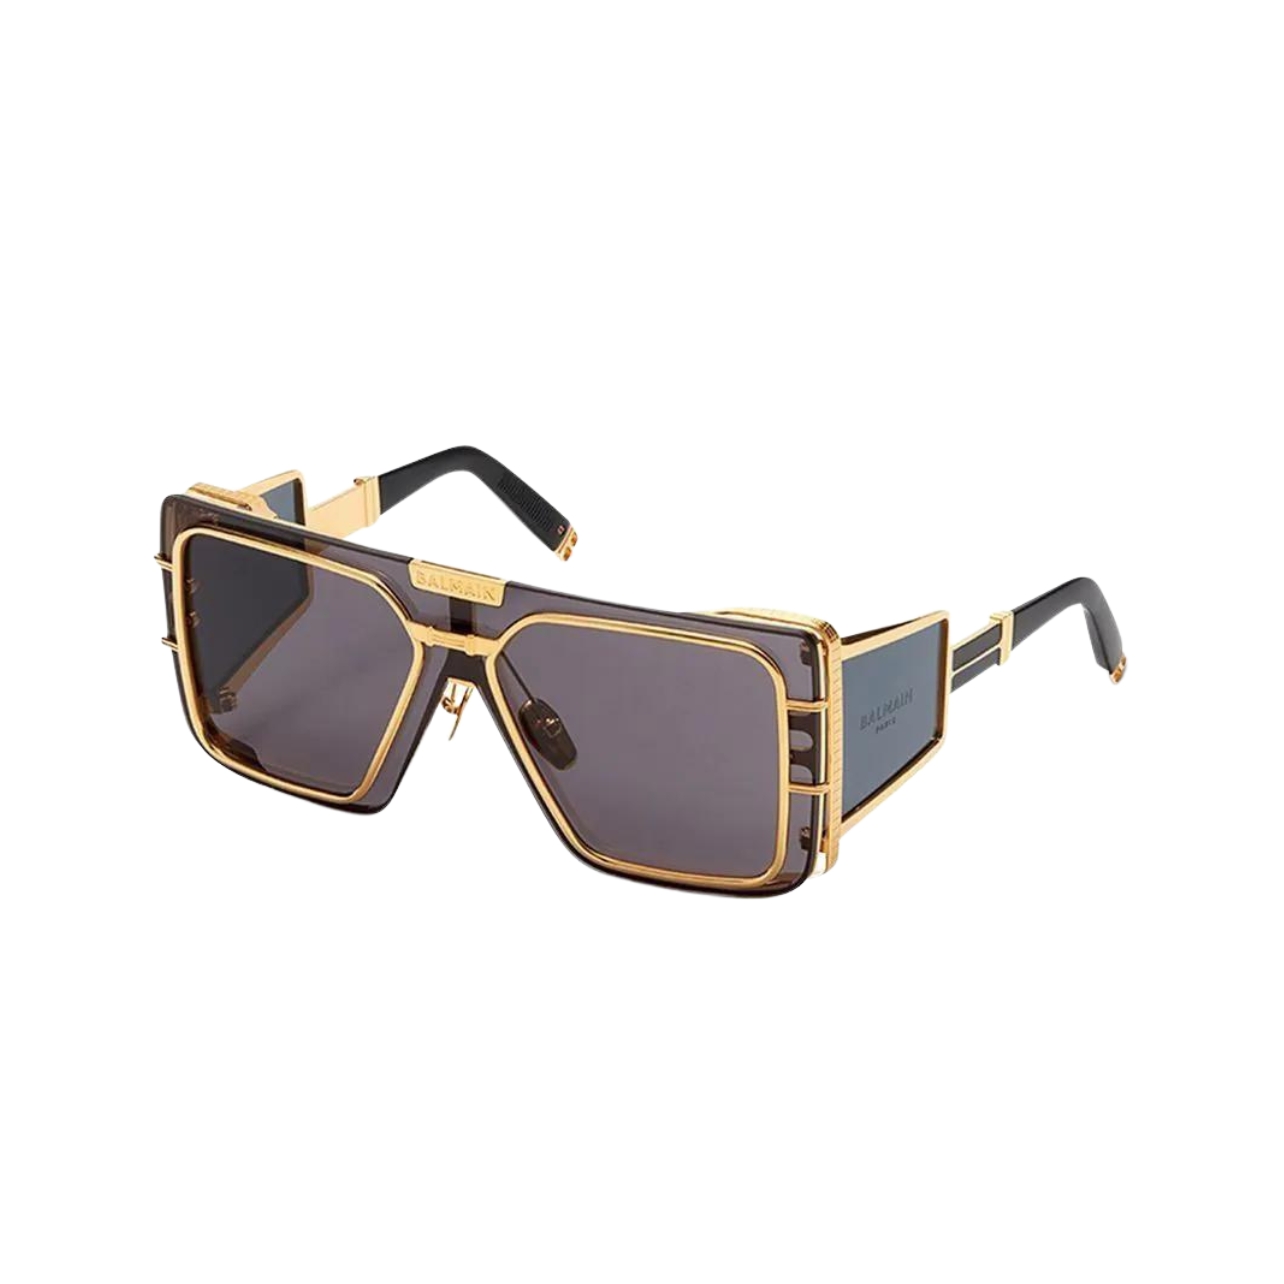 Wonder Boy square-frame sunglasses.